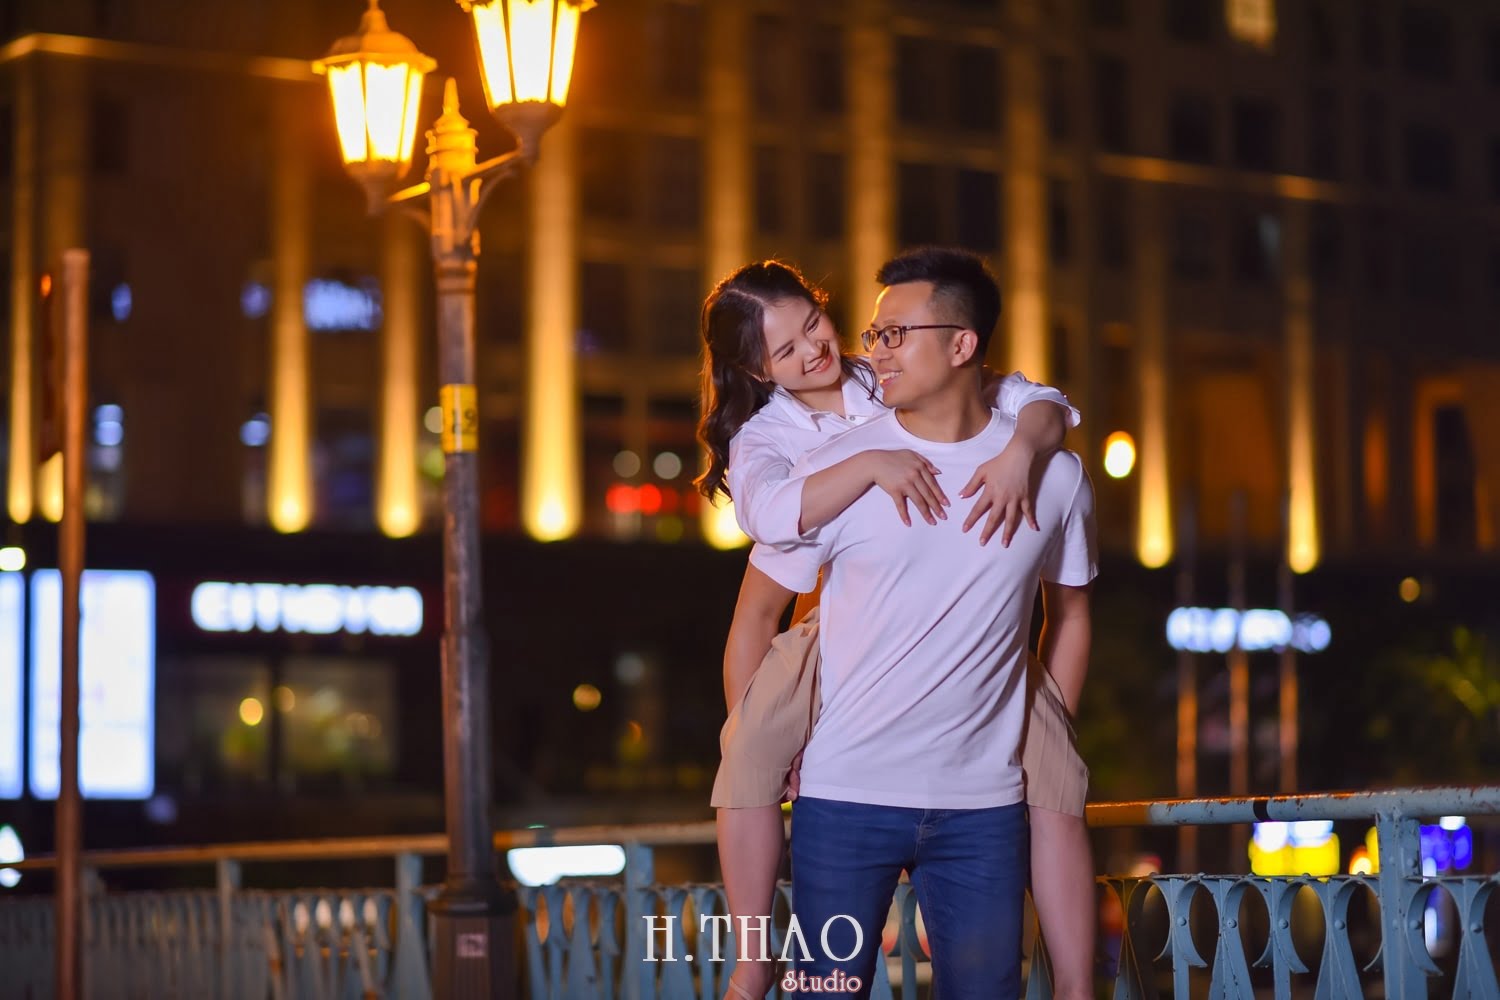 Anh chup couple ban dem 6 min - Album ảnh couple chụp buổi tối đẹp lung linh - HThao Studio